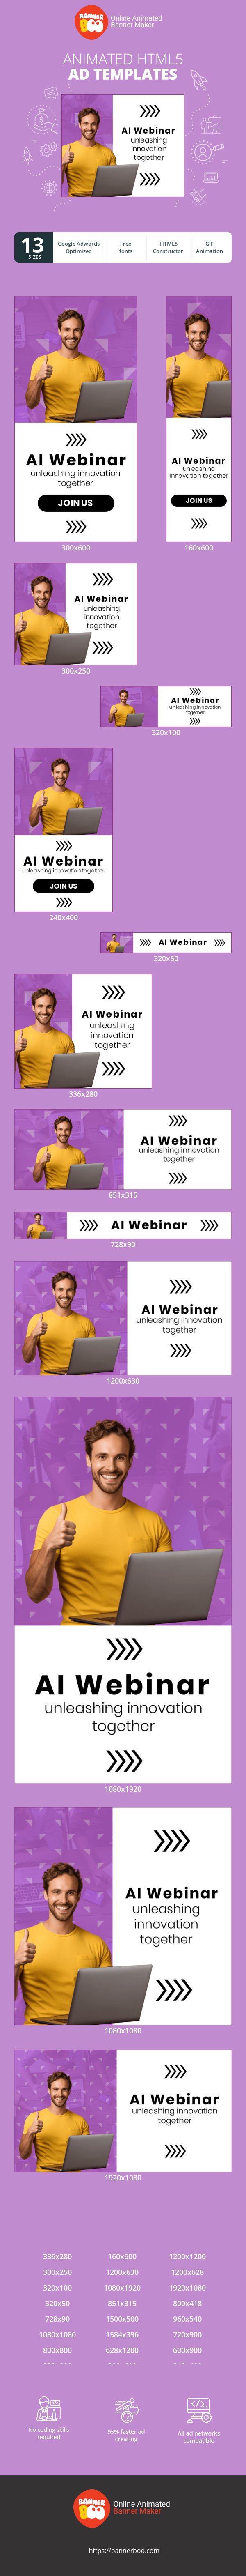 Banner ad template — AI Webinar — Unleashing Innovation Together